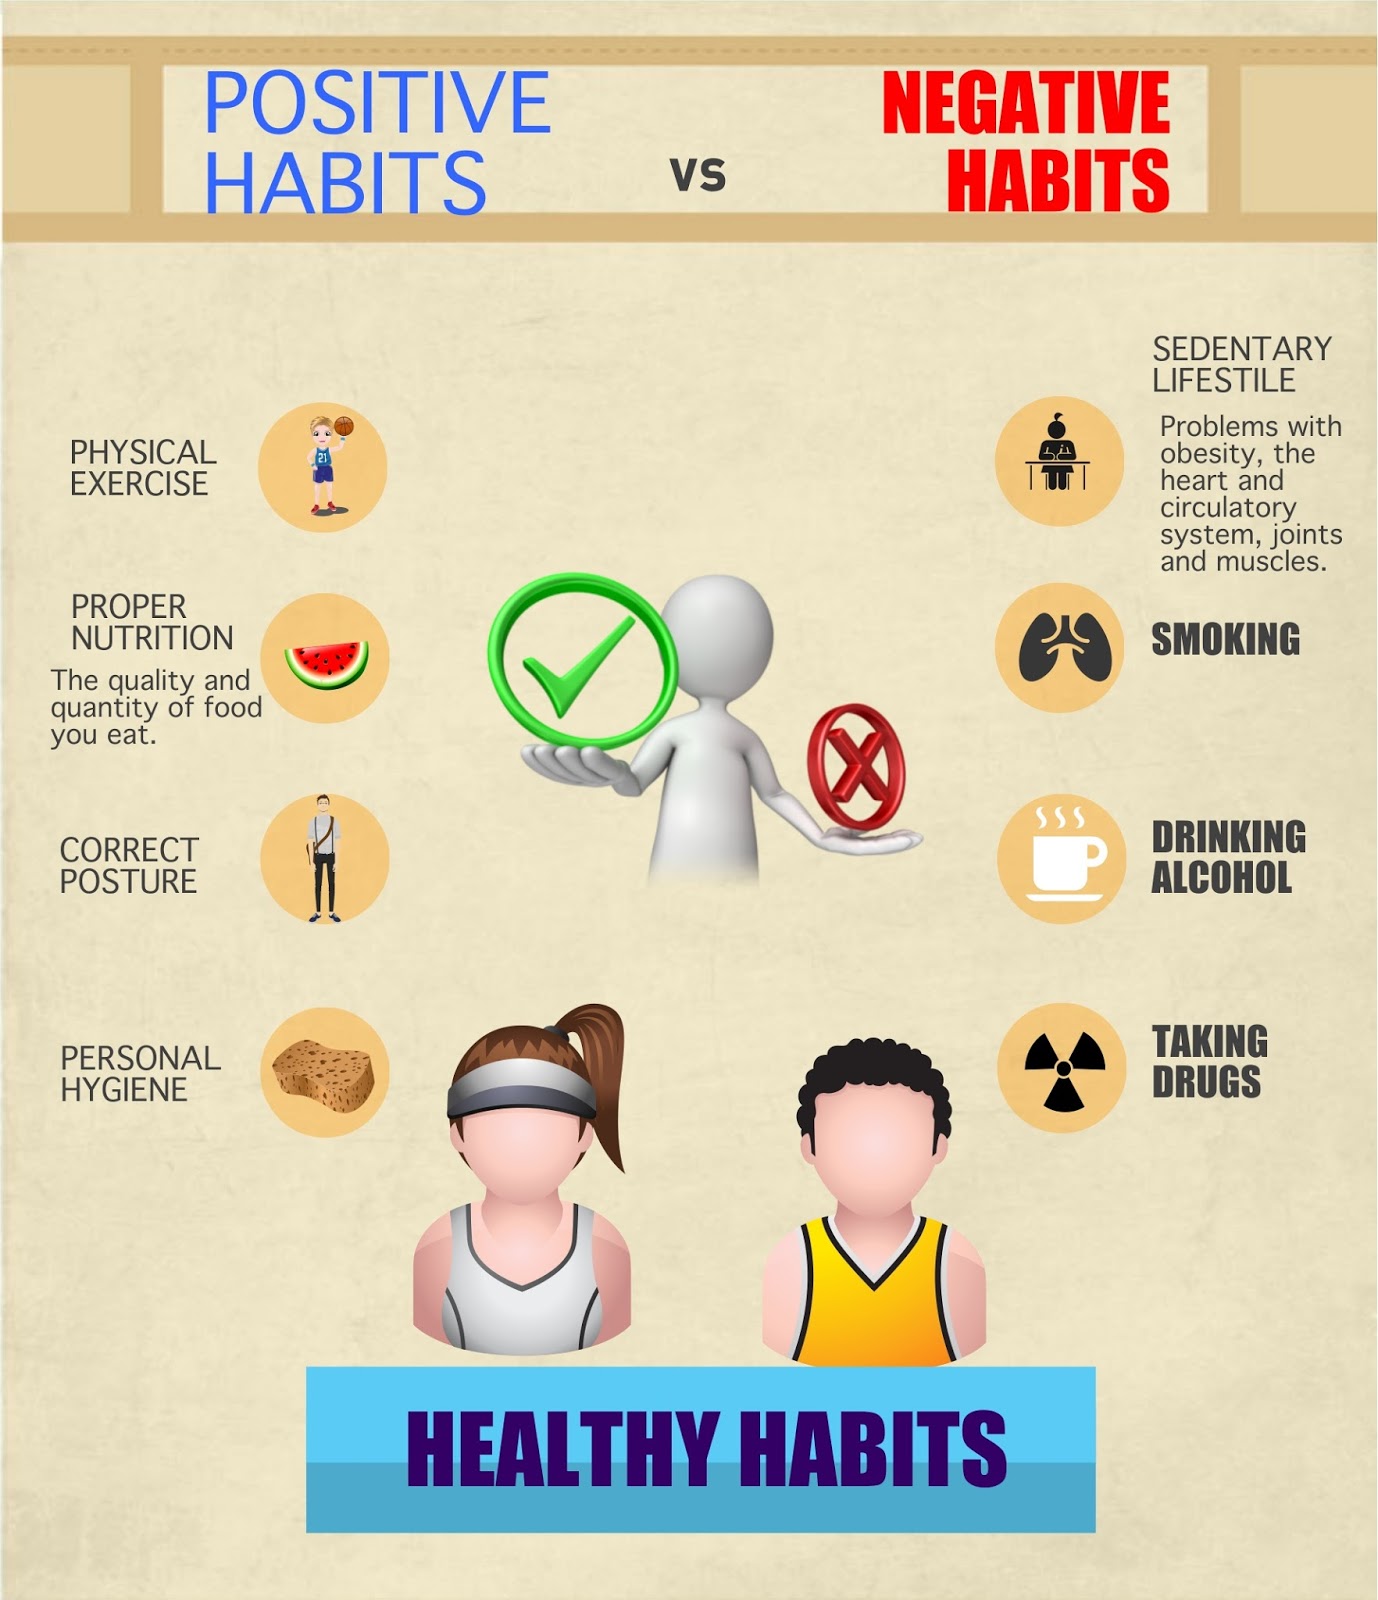 Unique habits. Healthy Habits. Positive and negative Habits. Healthy Habits presentation. Картинки по теме Habits.